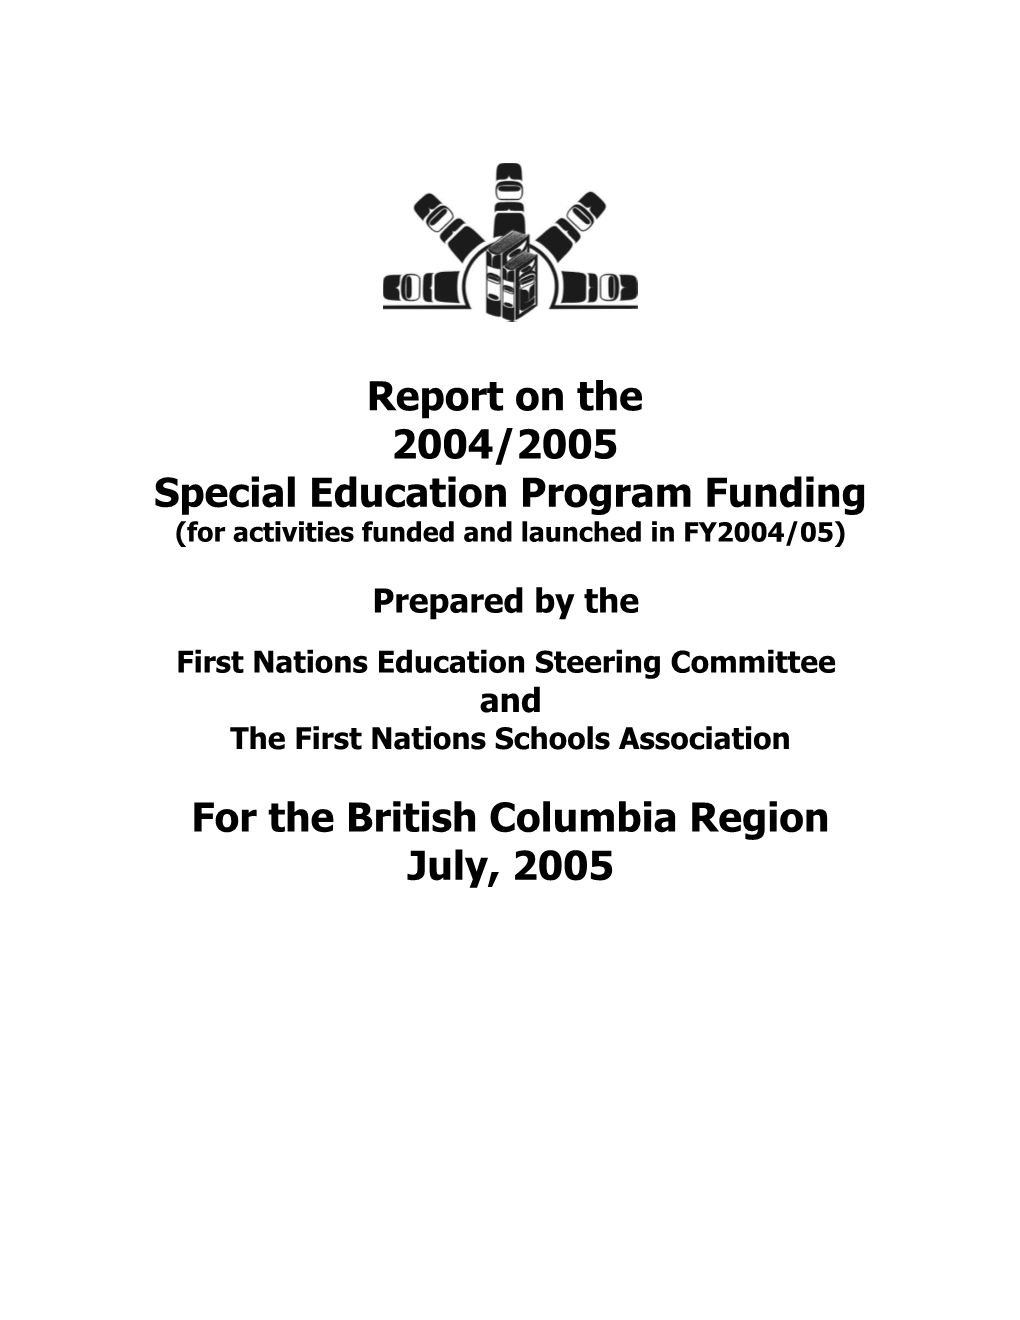 Special Education Program Funding